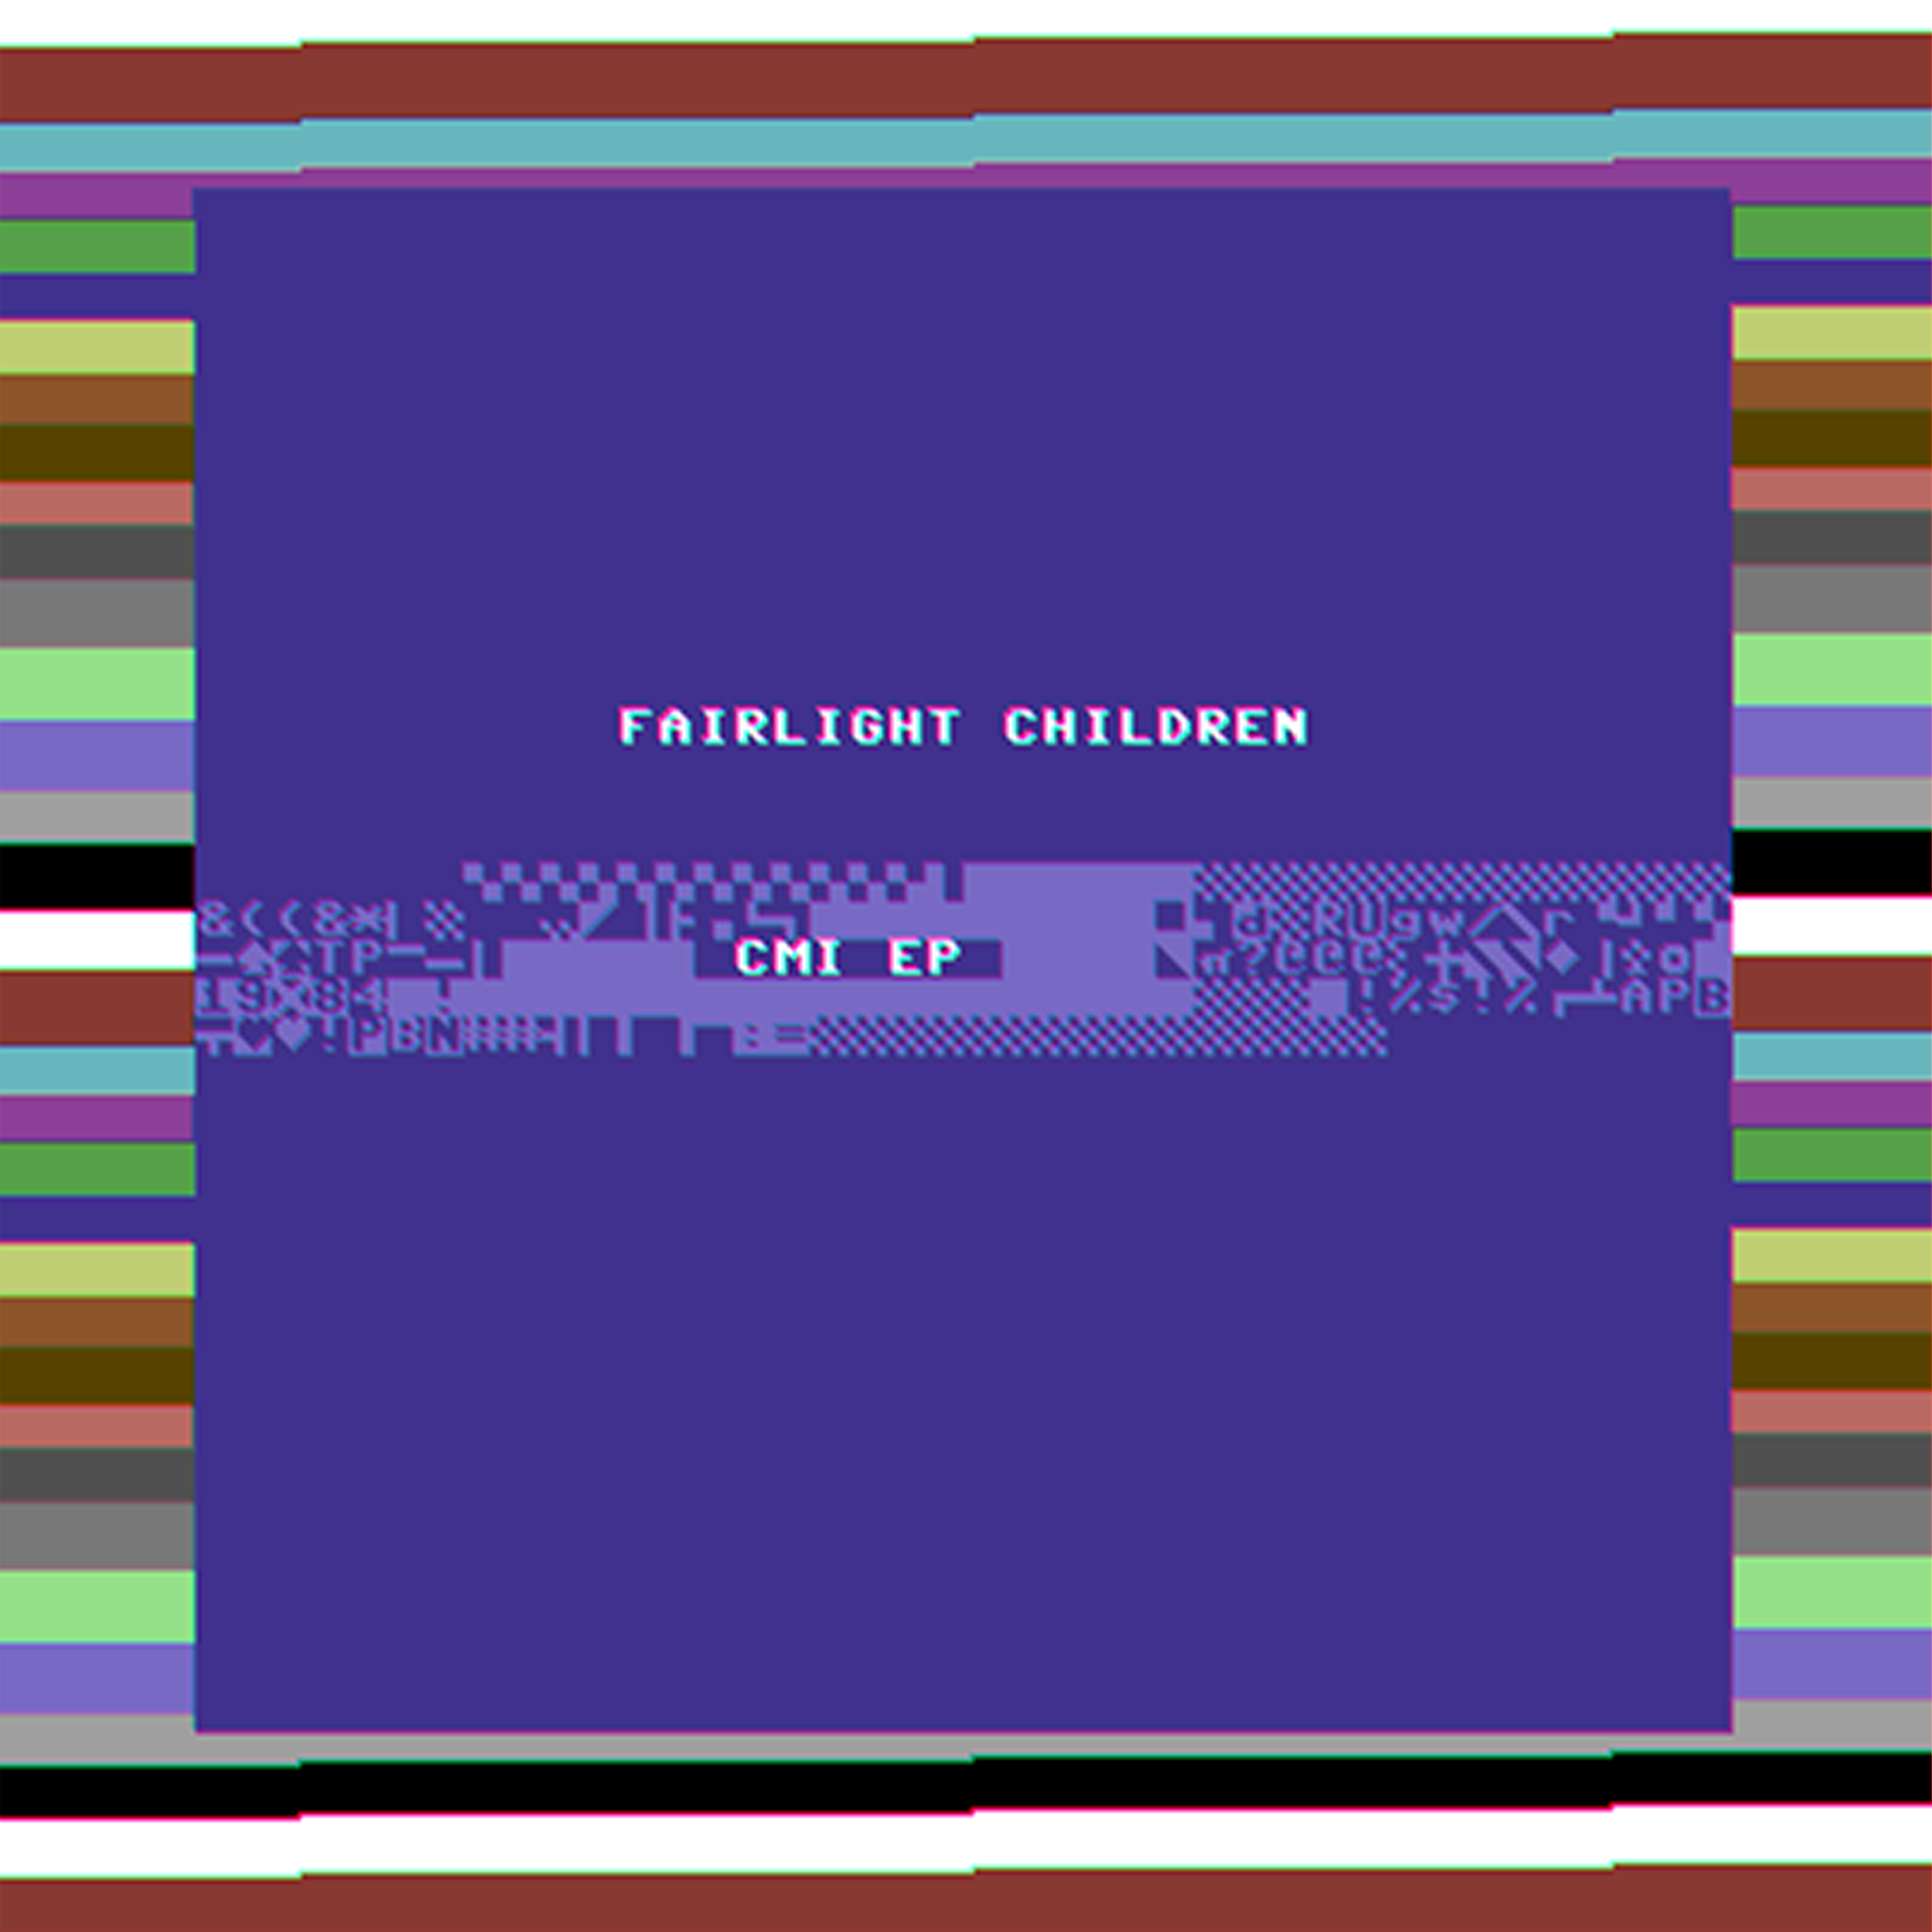 Fairlight Childreen - CMI EP